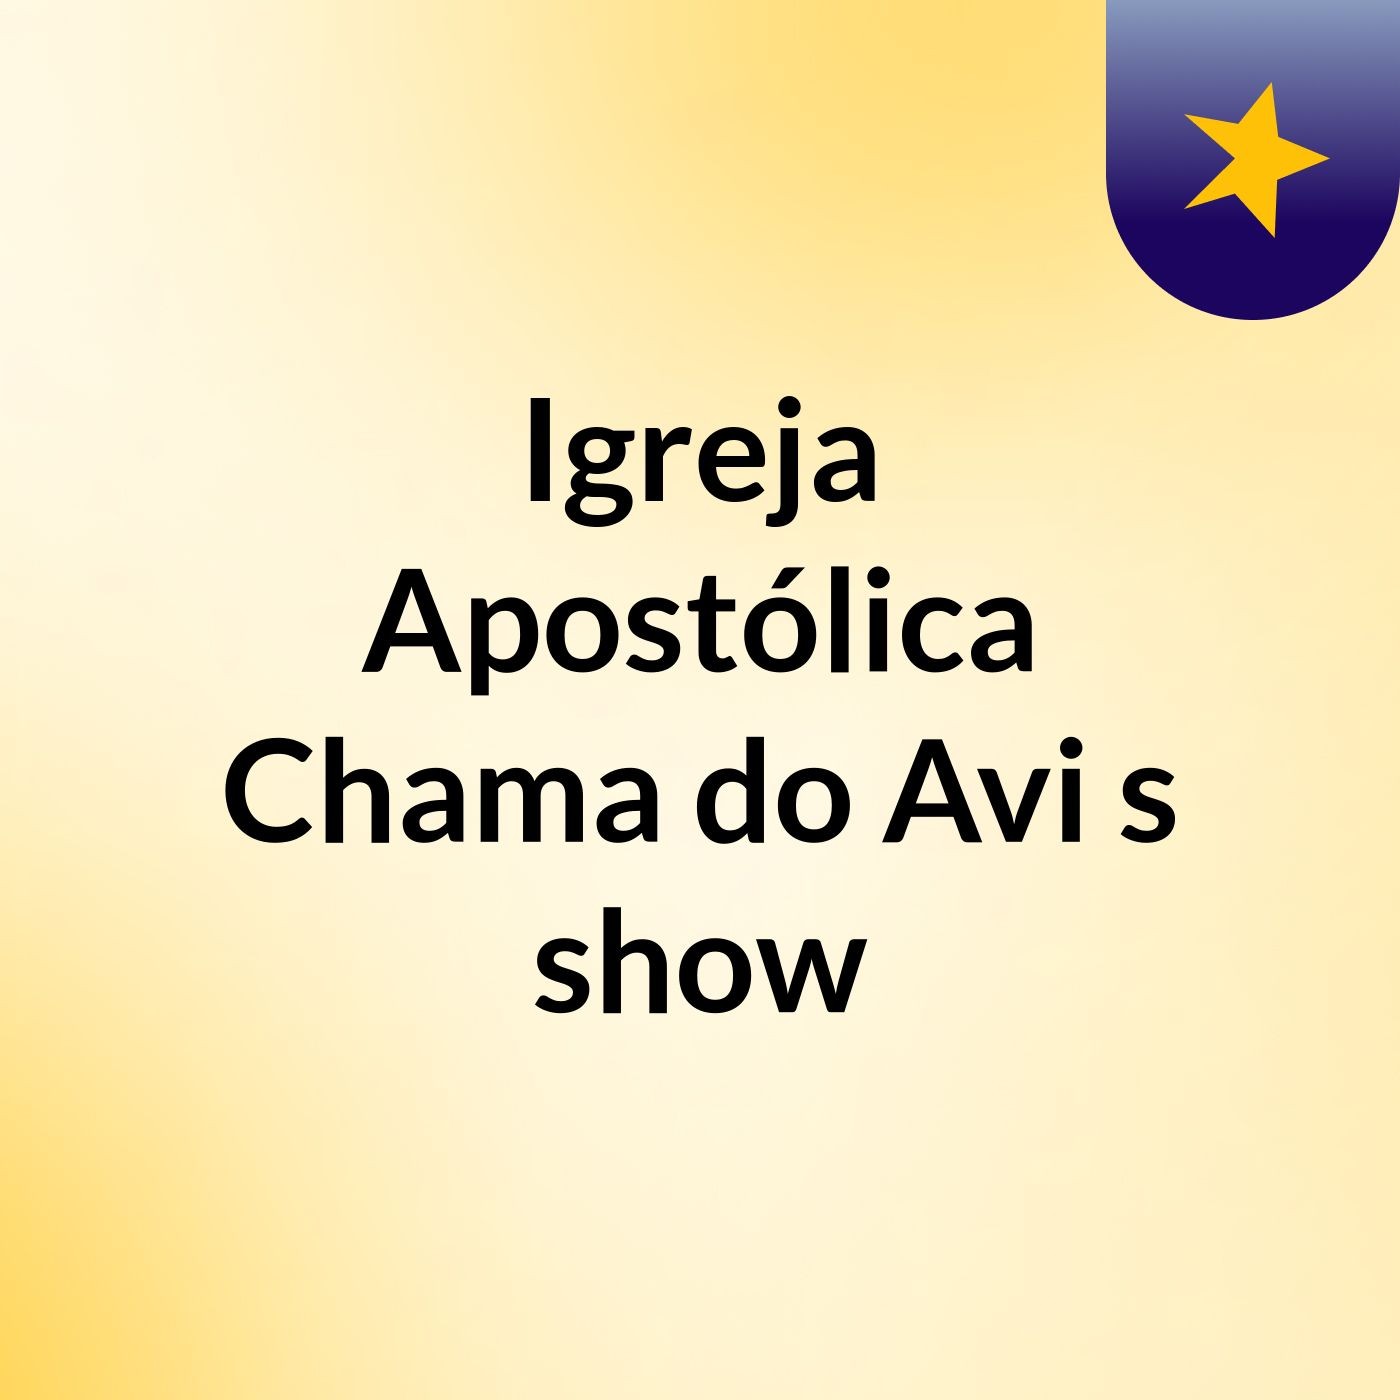 Igreja Apostólica Chama do Avi's show